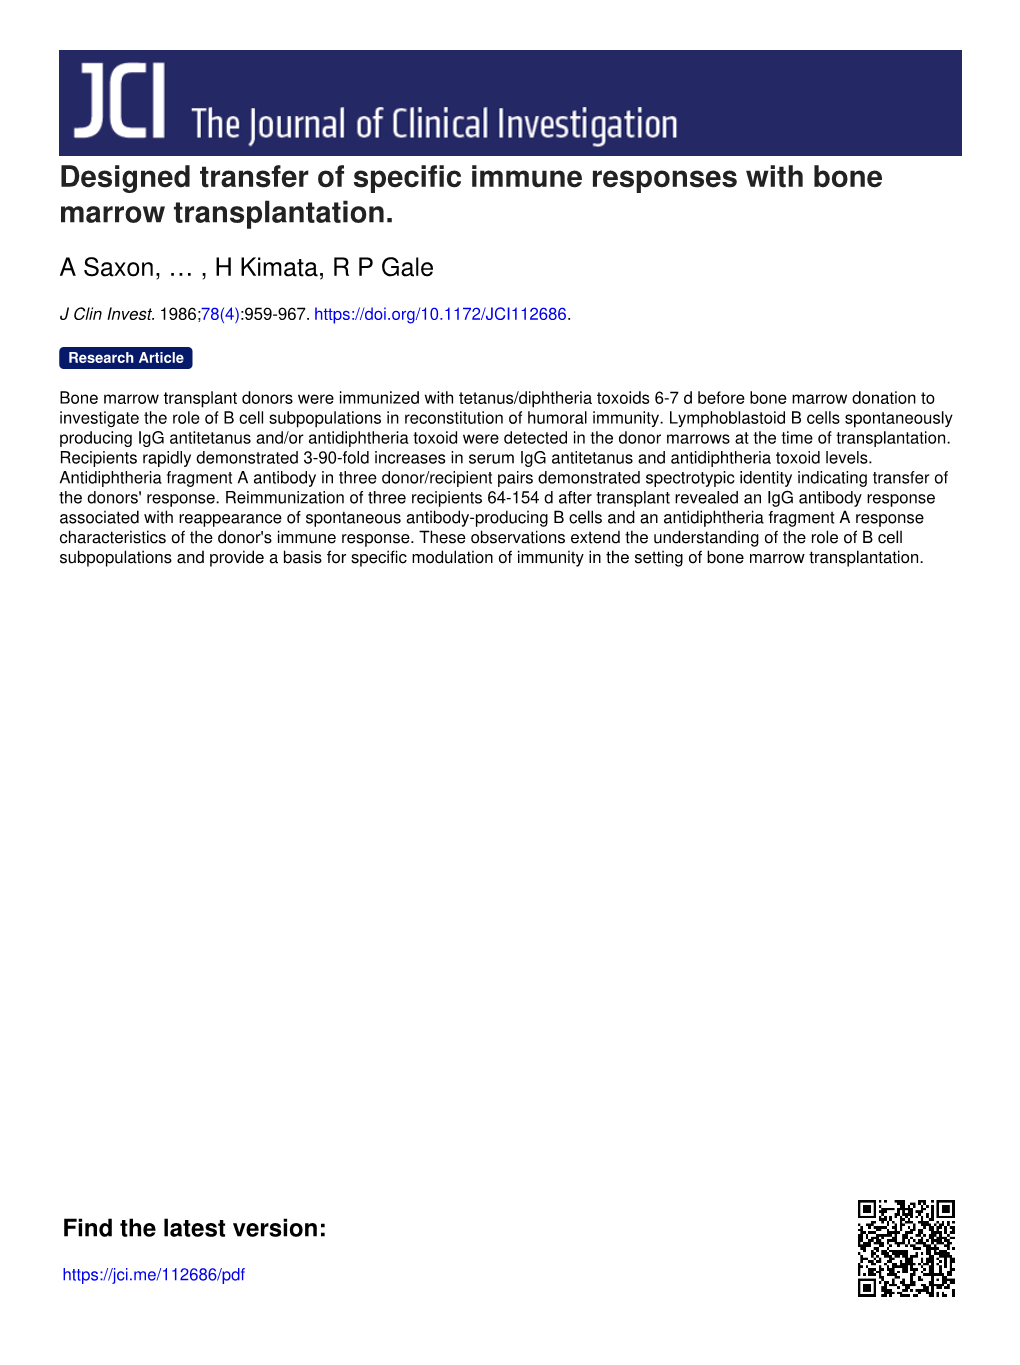 Designed Transfer of Specific Immune Responses with Bone Marrow Transplantation